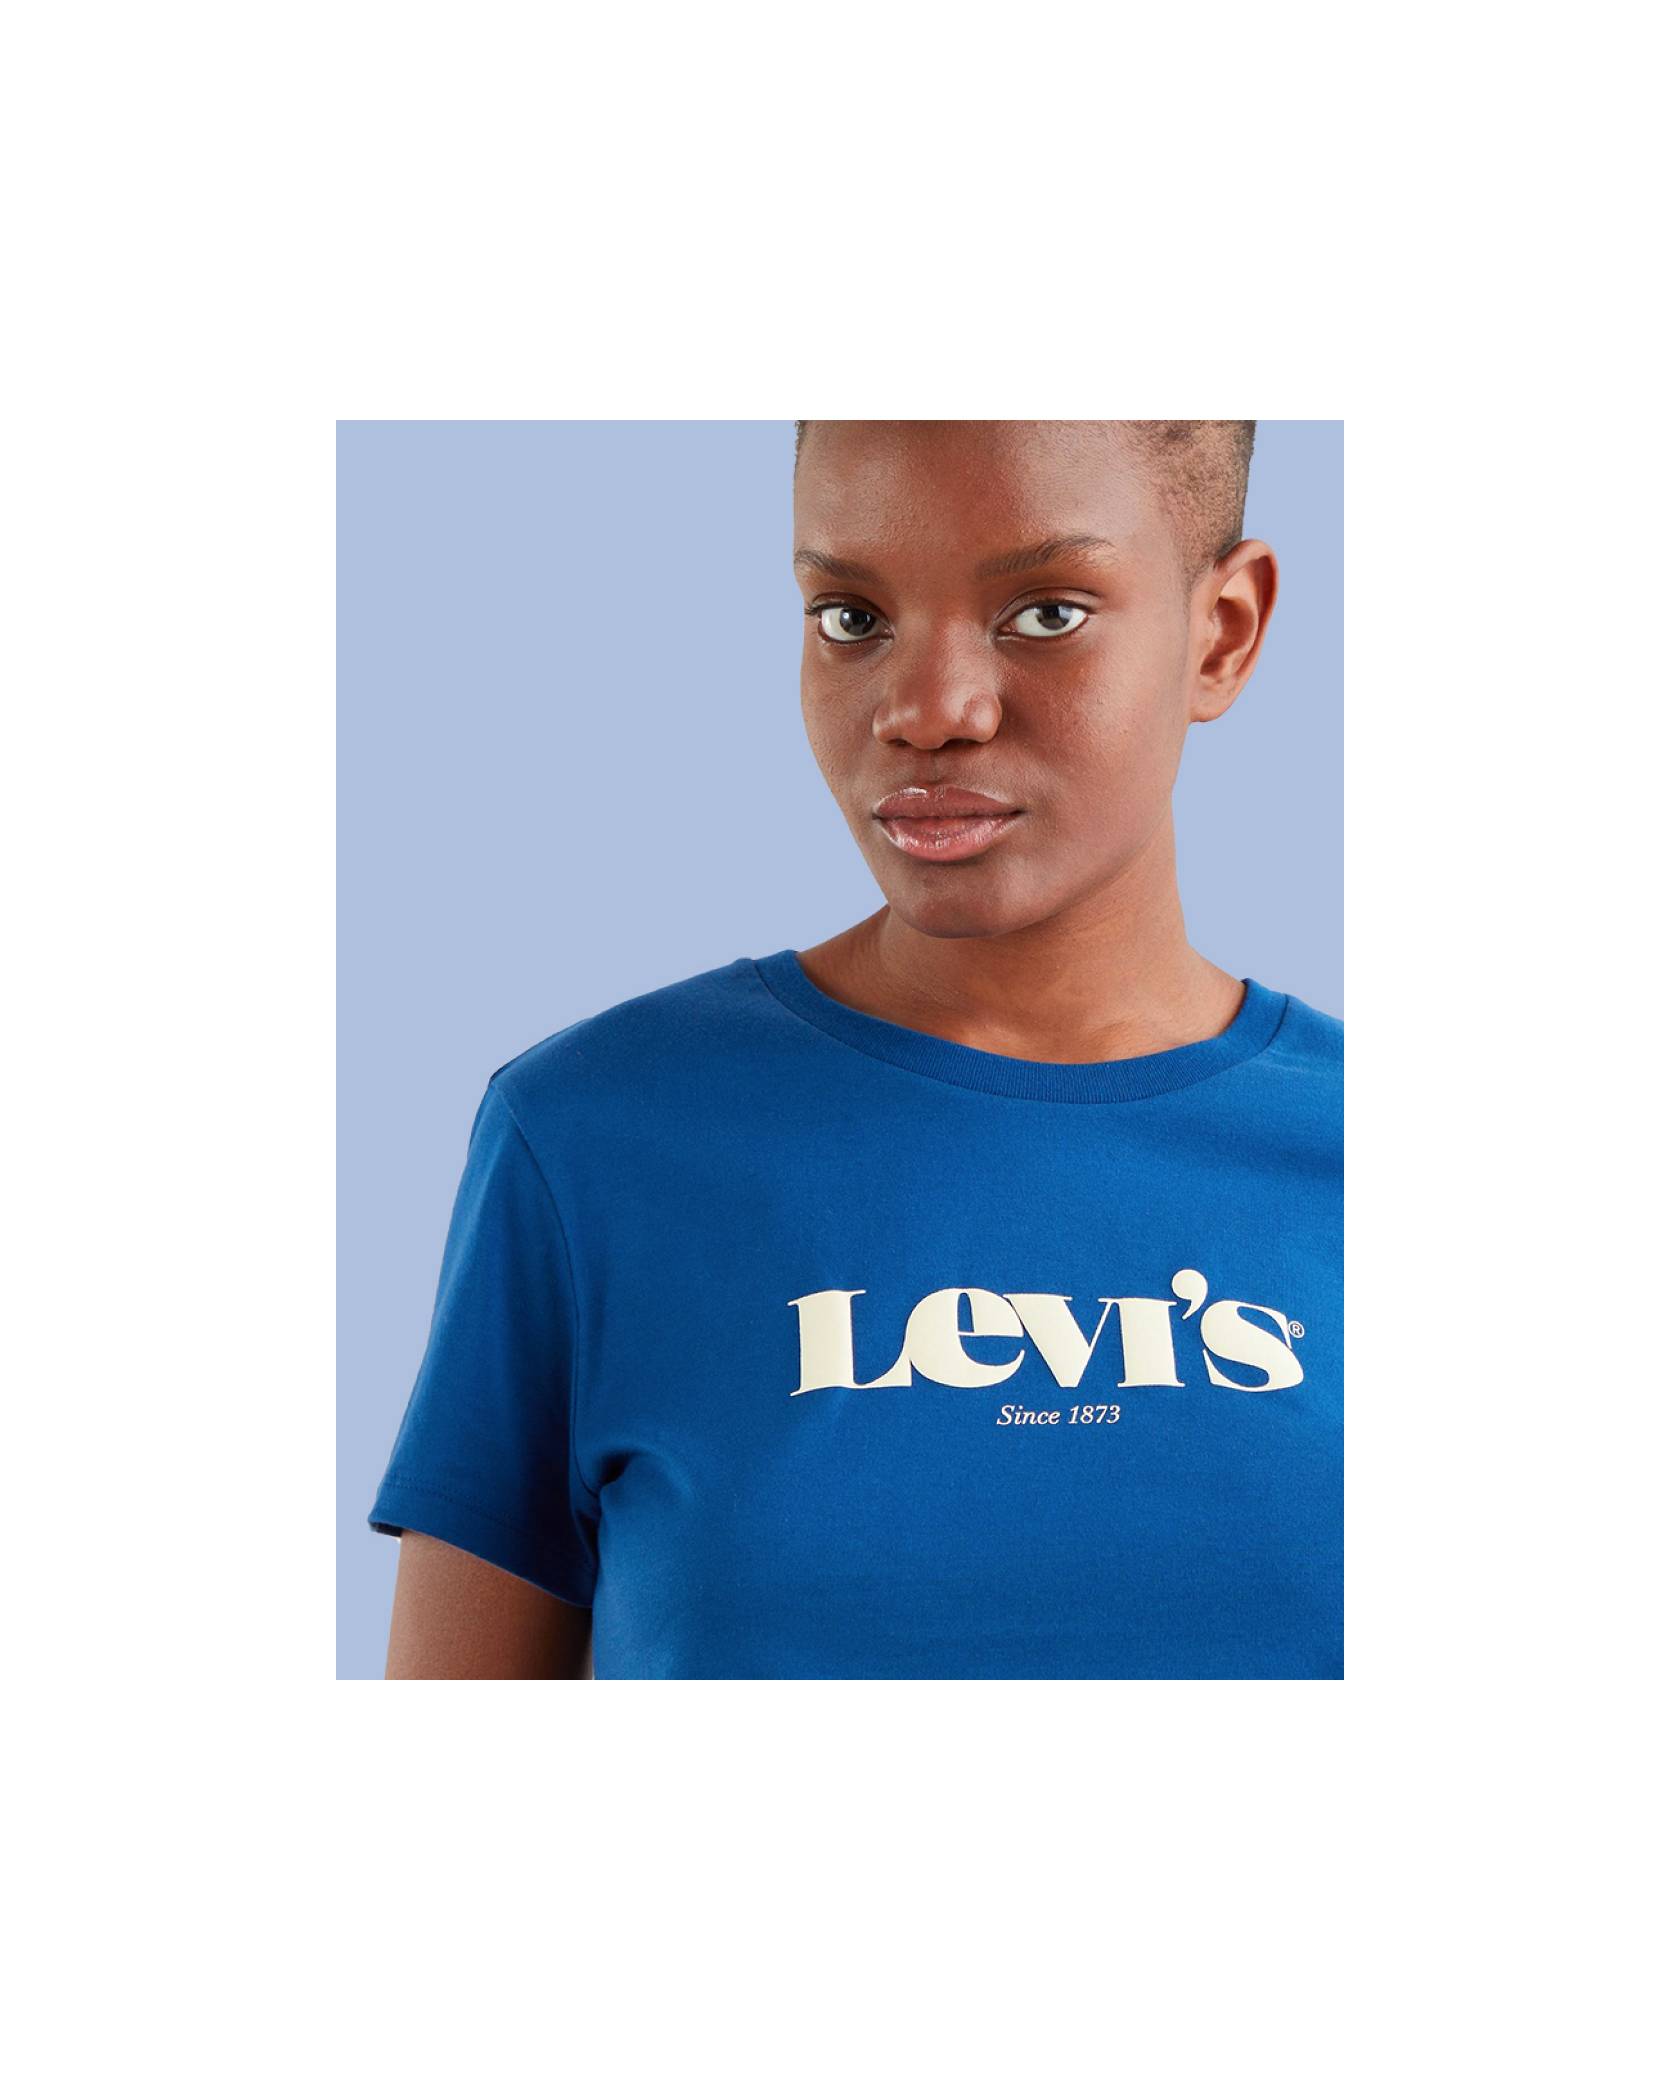 Woman wearing a Levi's® blue t-shirt